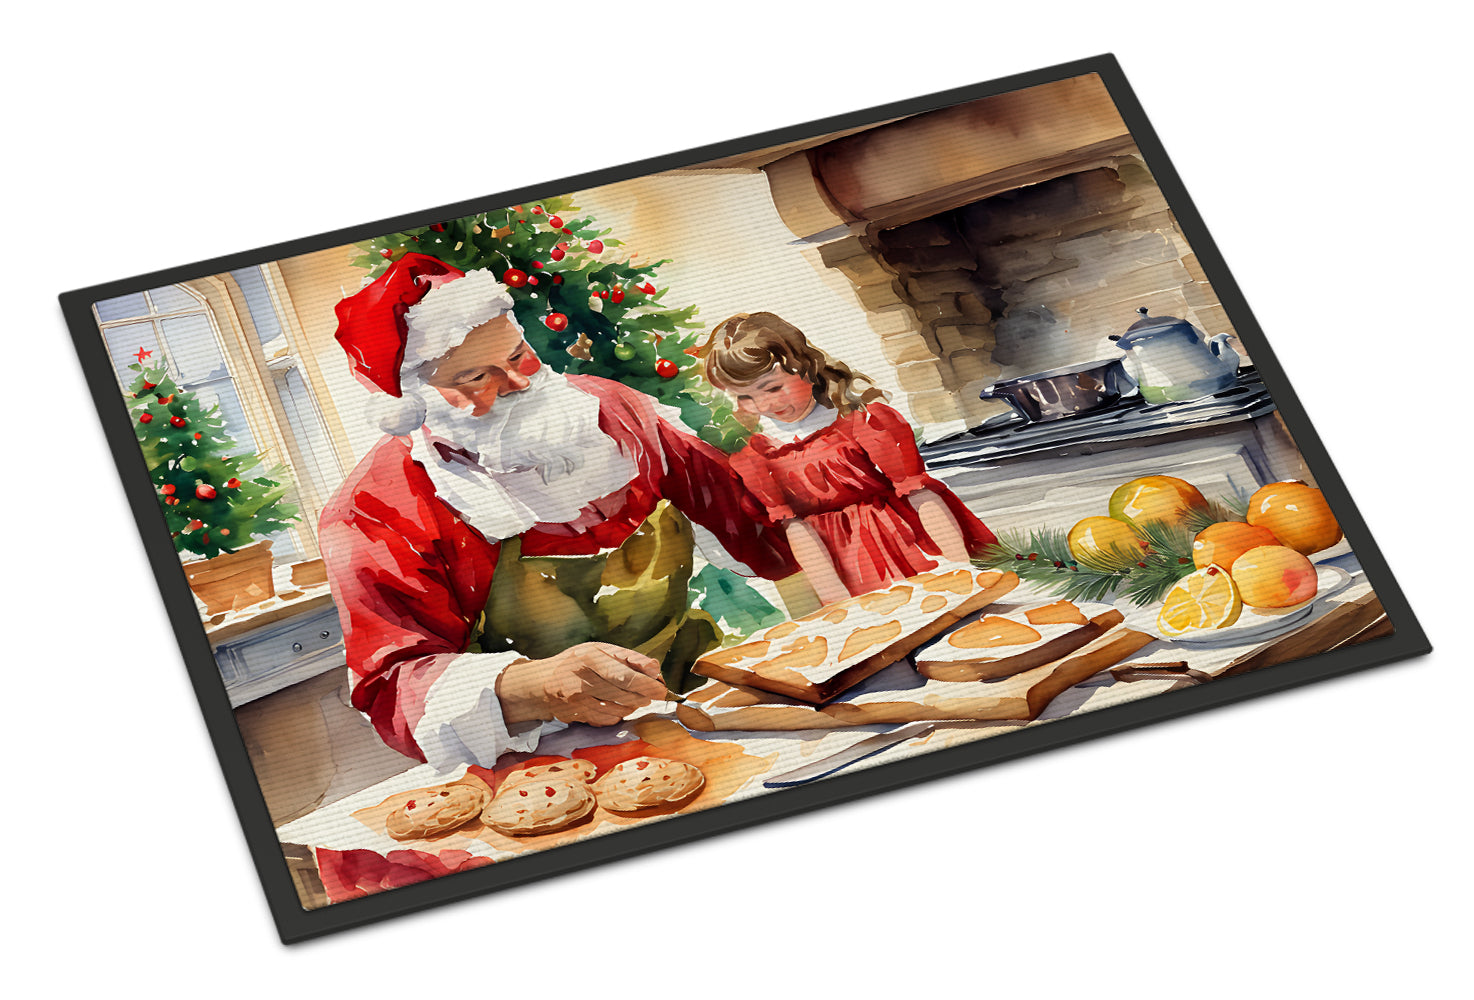 Buy this Cookies with Santa Claus Doormat